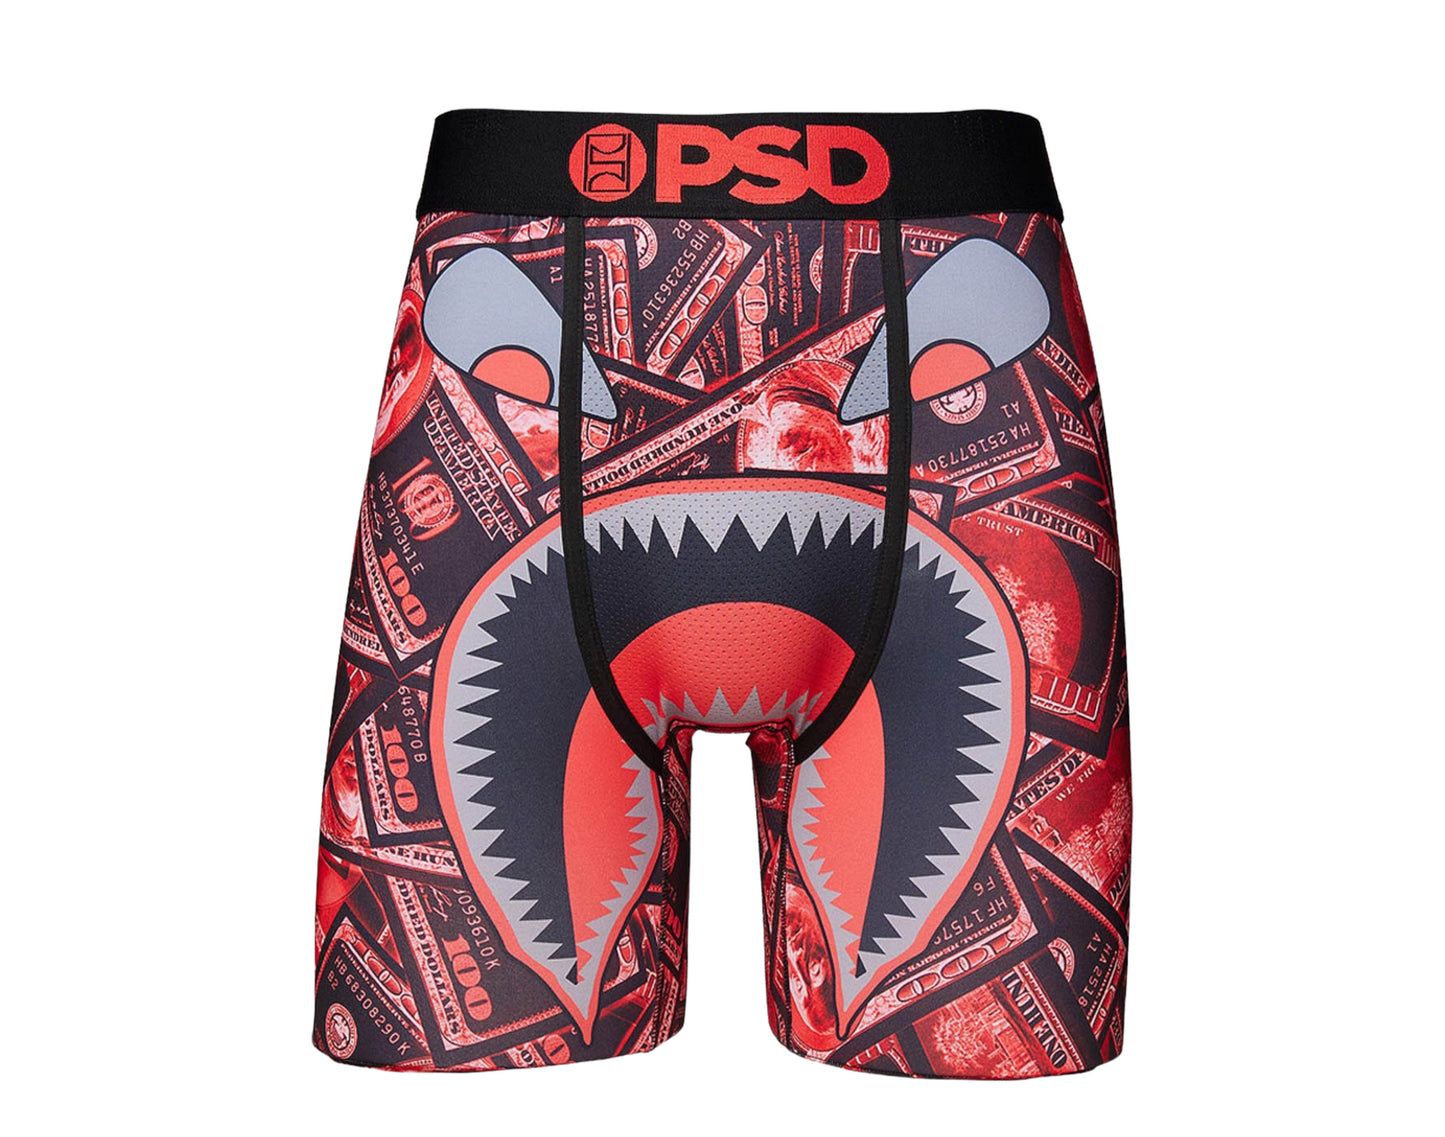 PSD Warface Capital Boxer Briefs Men's Underwear